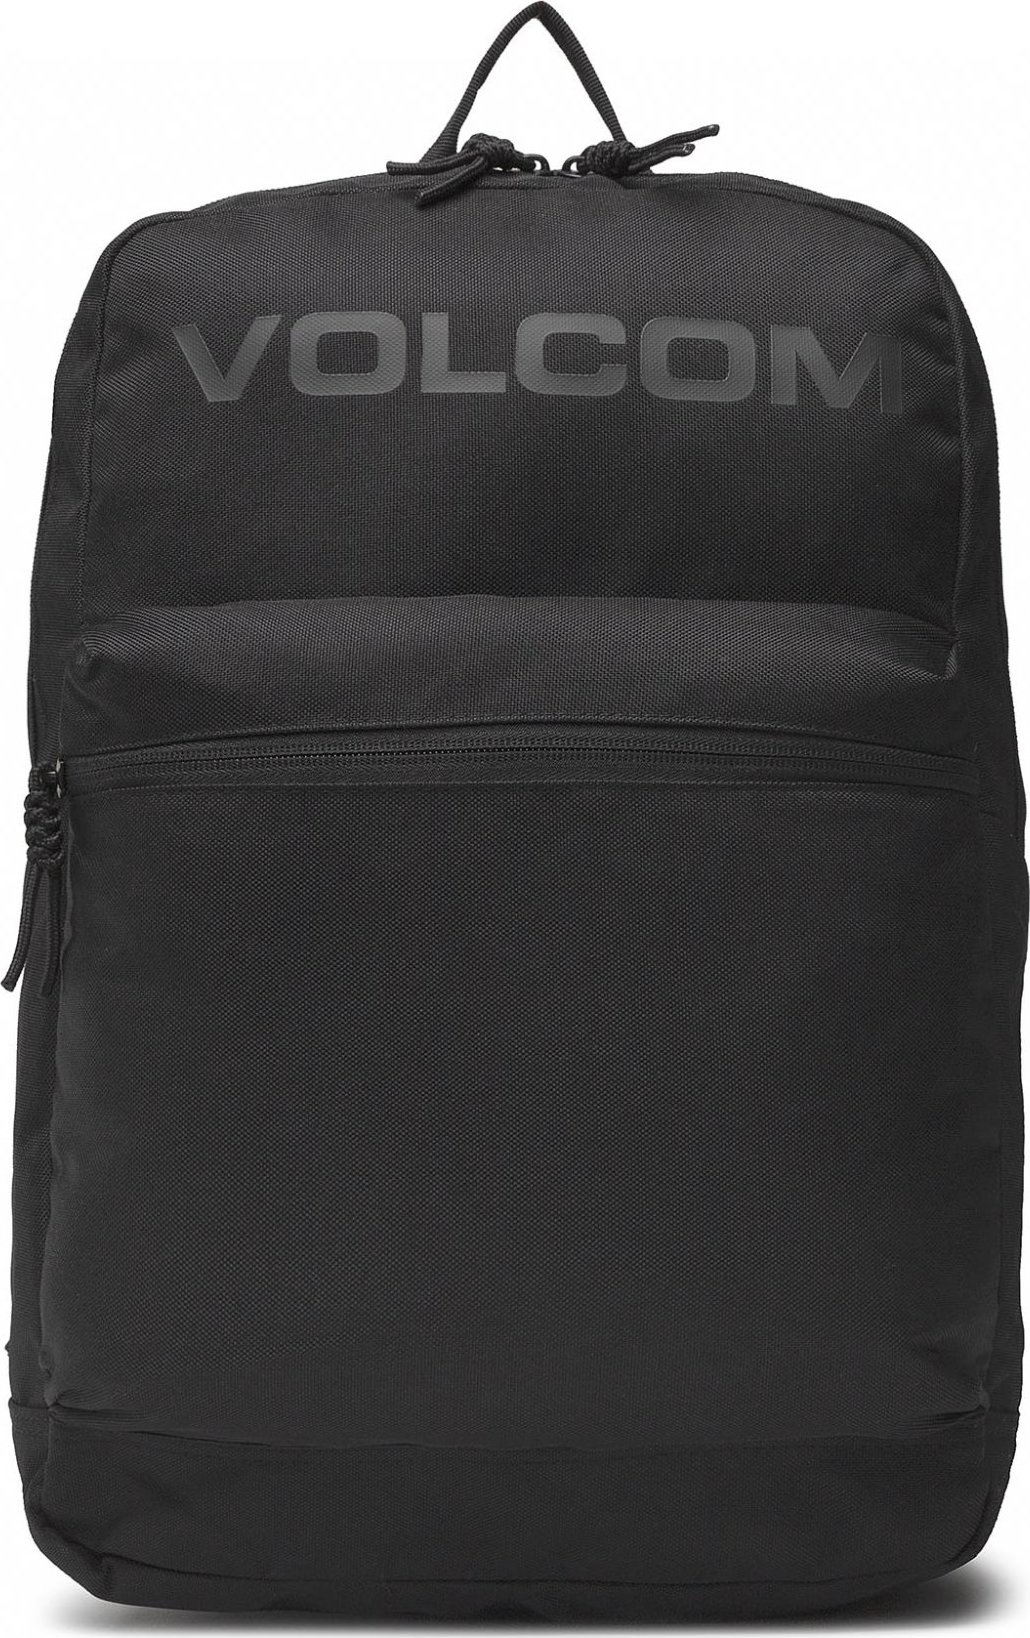 Volcom School Backpack D6522205